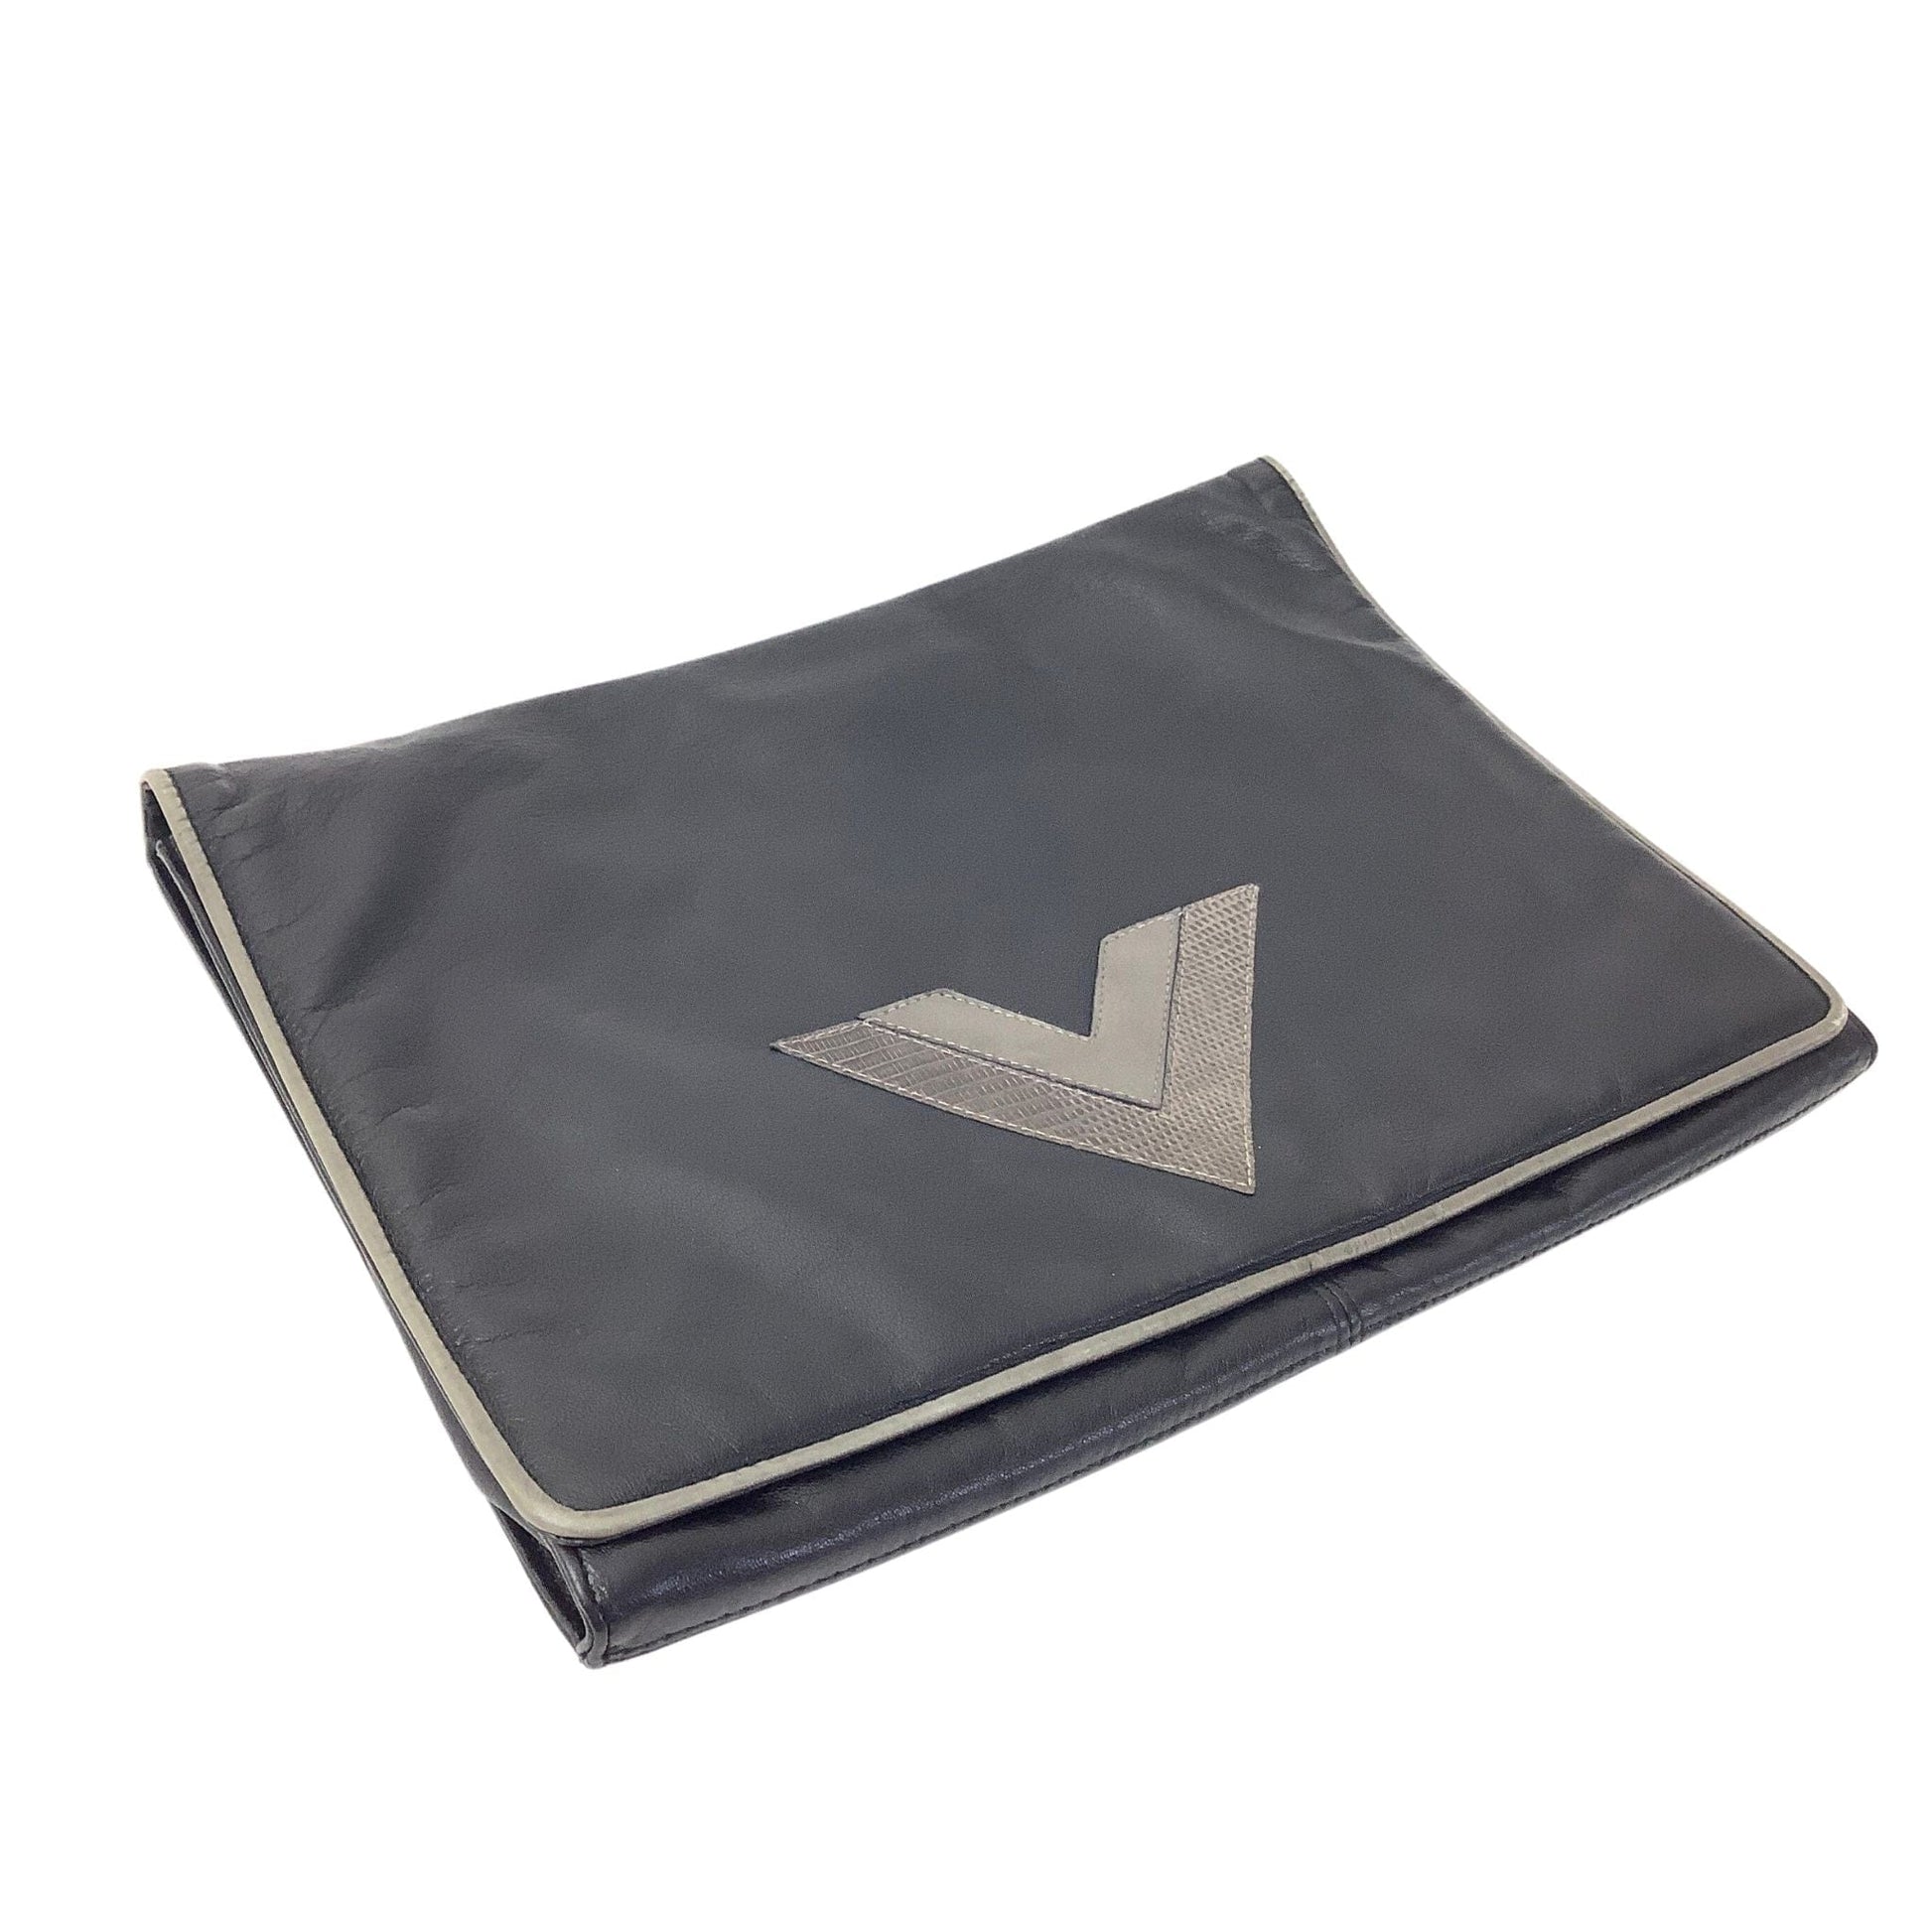 Picard Clutch Bag Navy / Leather / Vintage 1970s